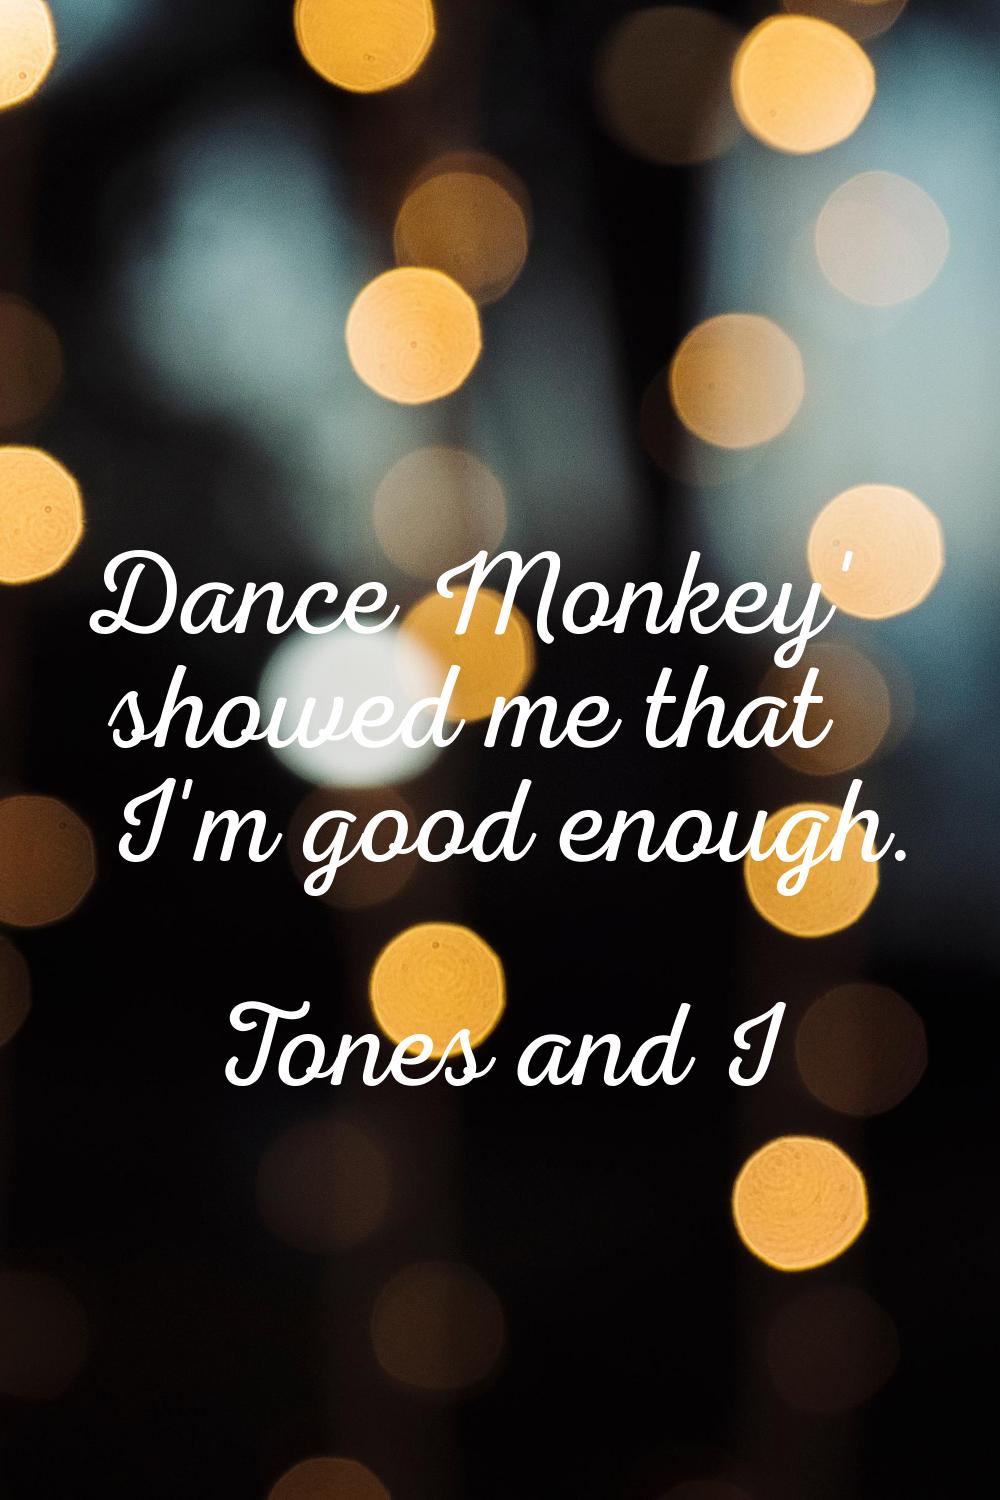 Dance Monkey' showed me that I'm good enough.